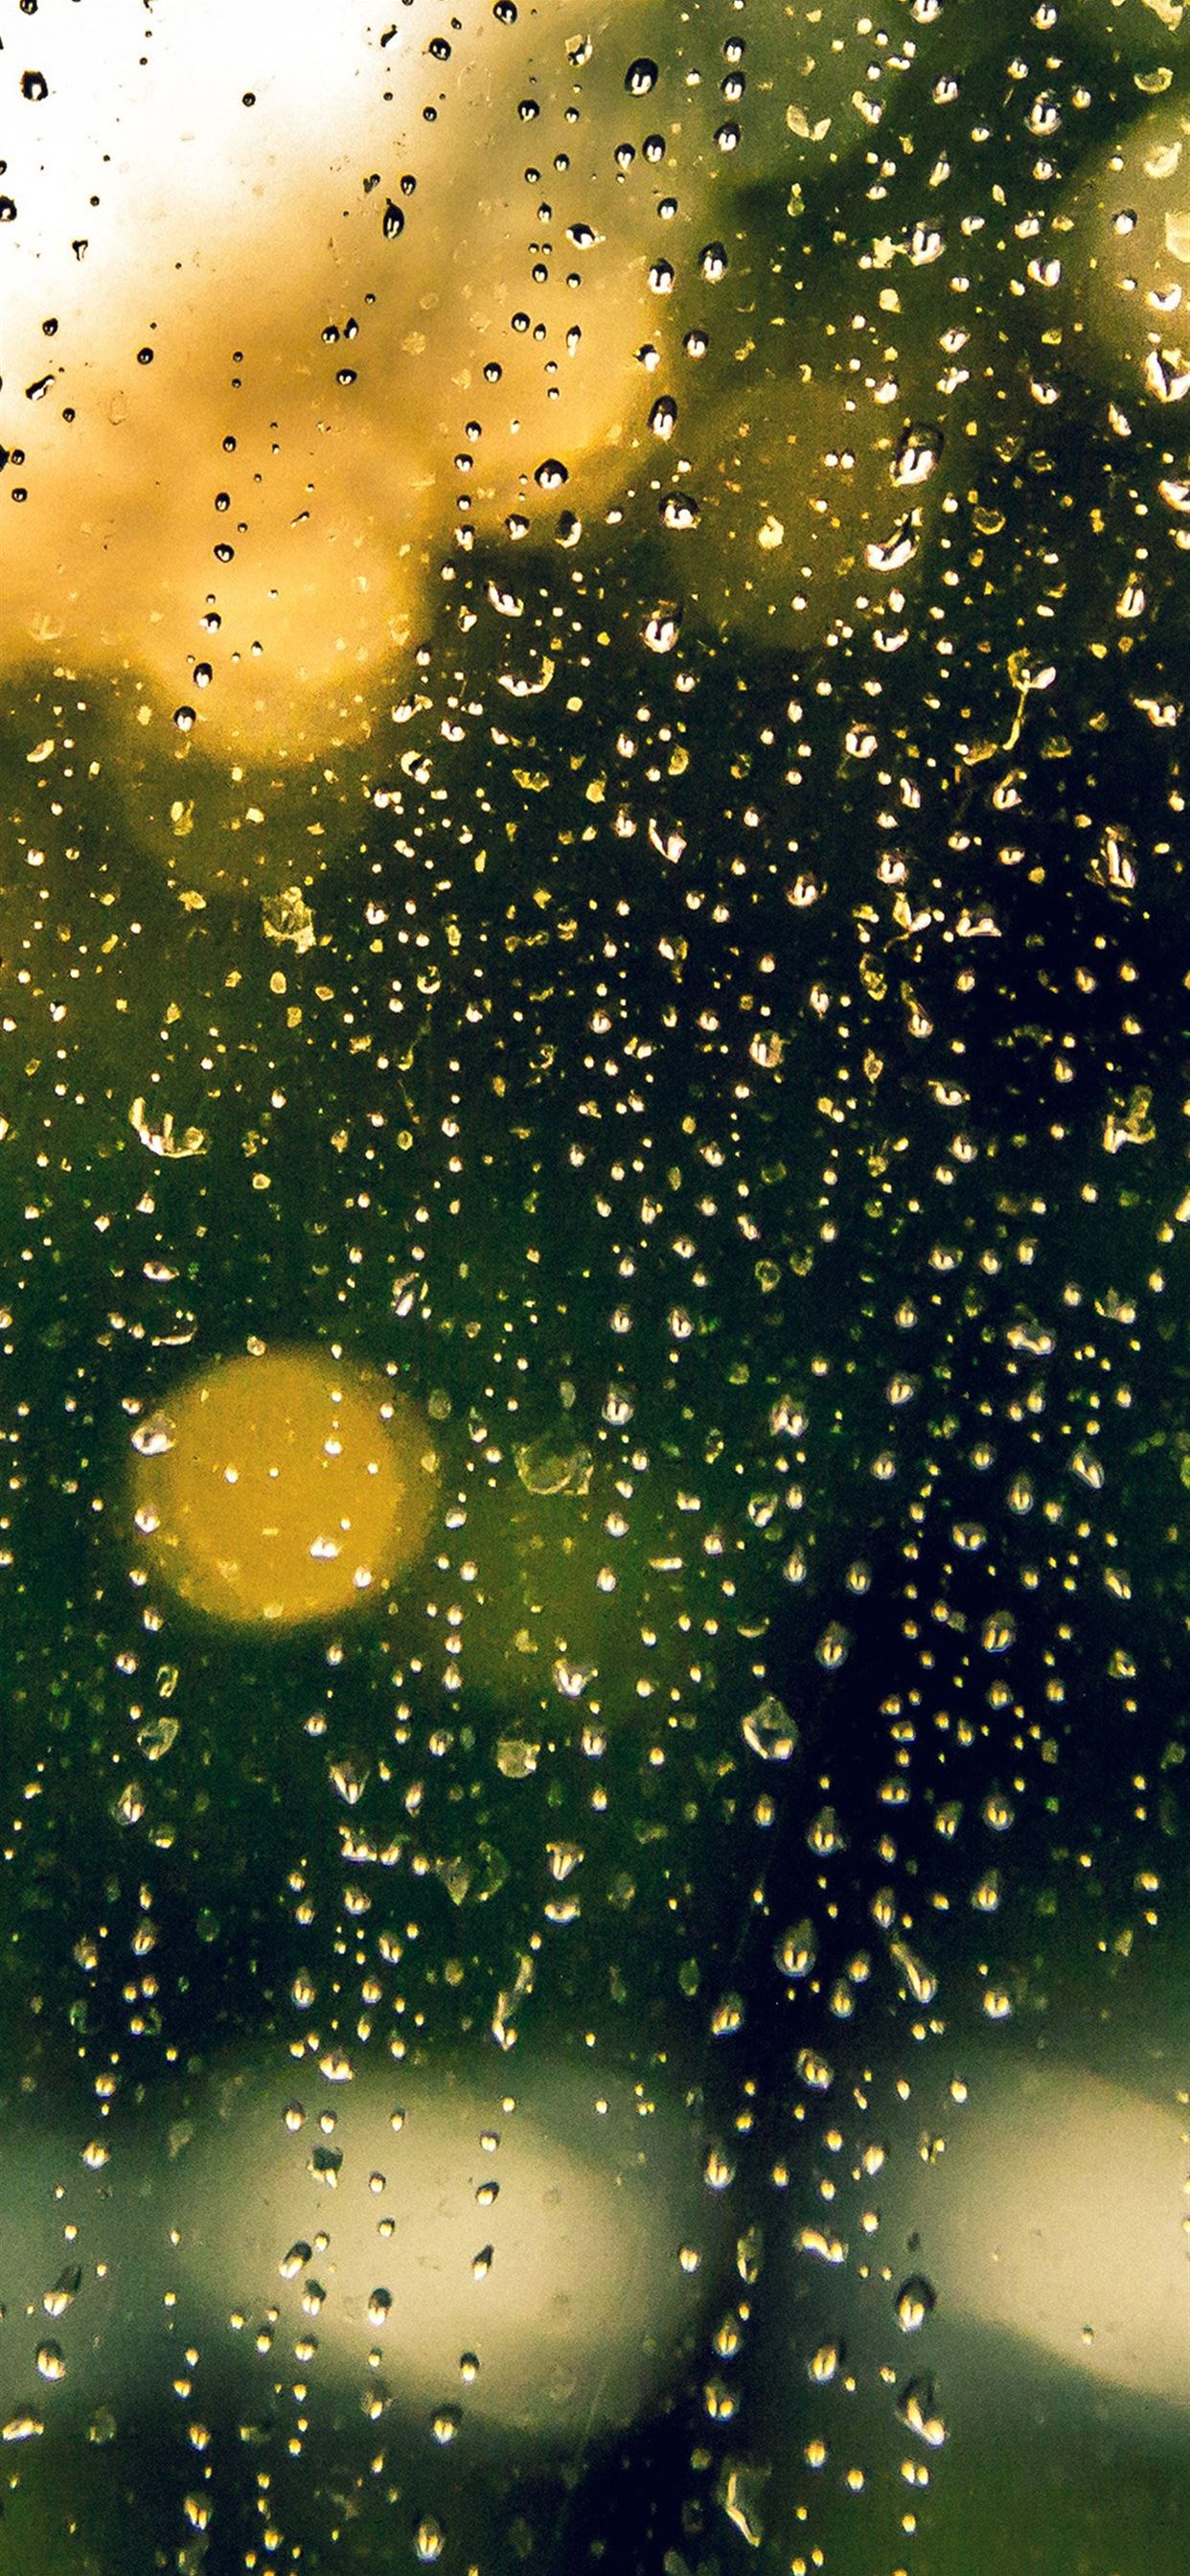  Rain  window bokeh iPhone  X Wallpapers  Free Download